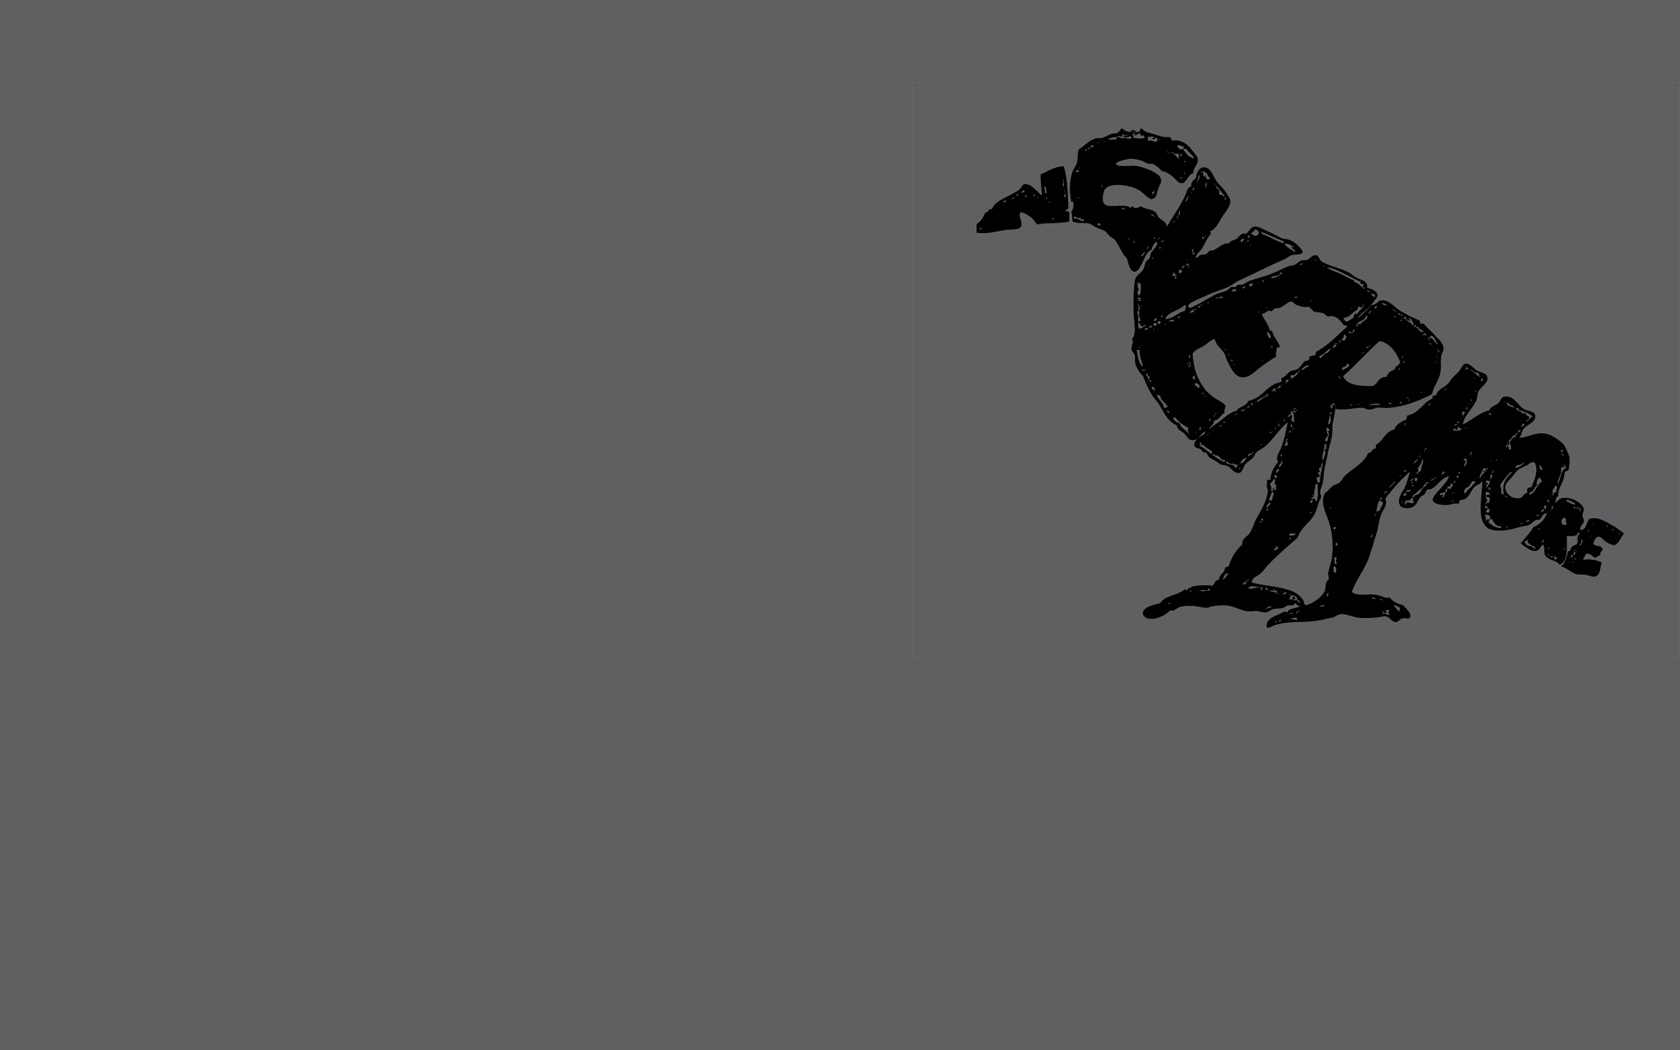 Wallpaper Typography Grayscale Edgar Allan Poe Ravens